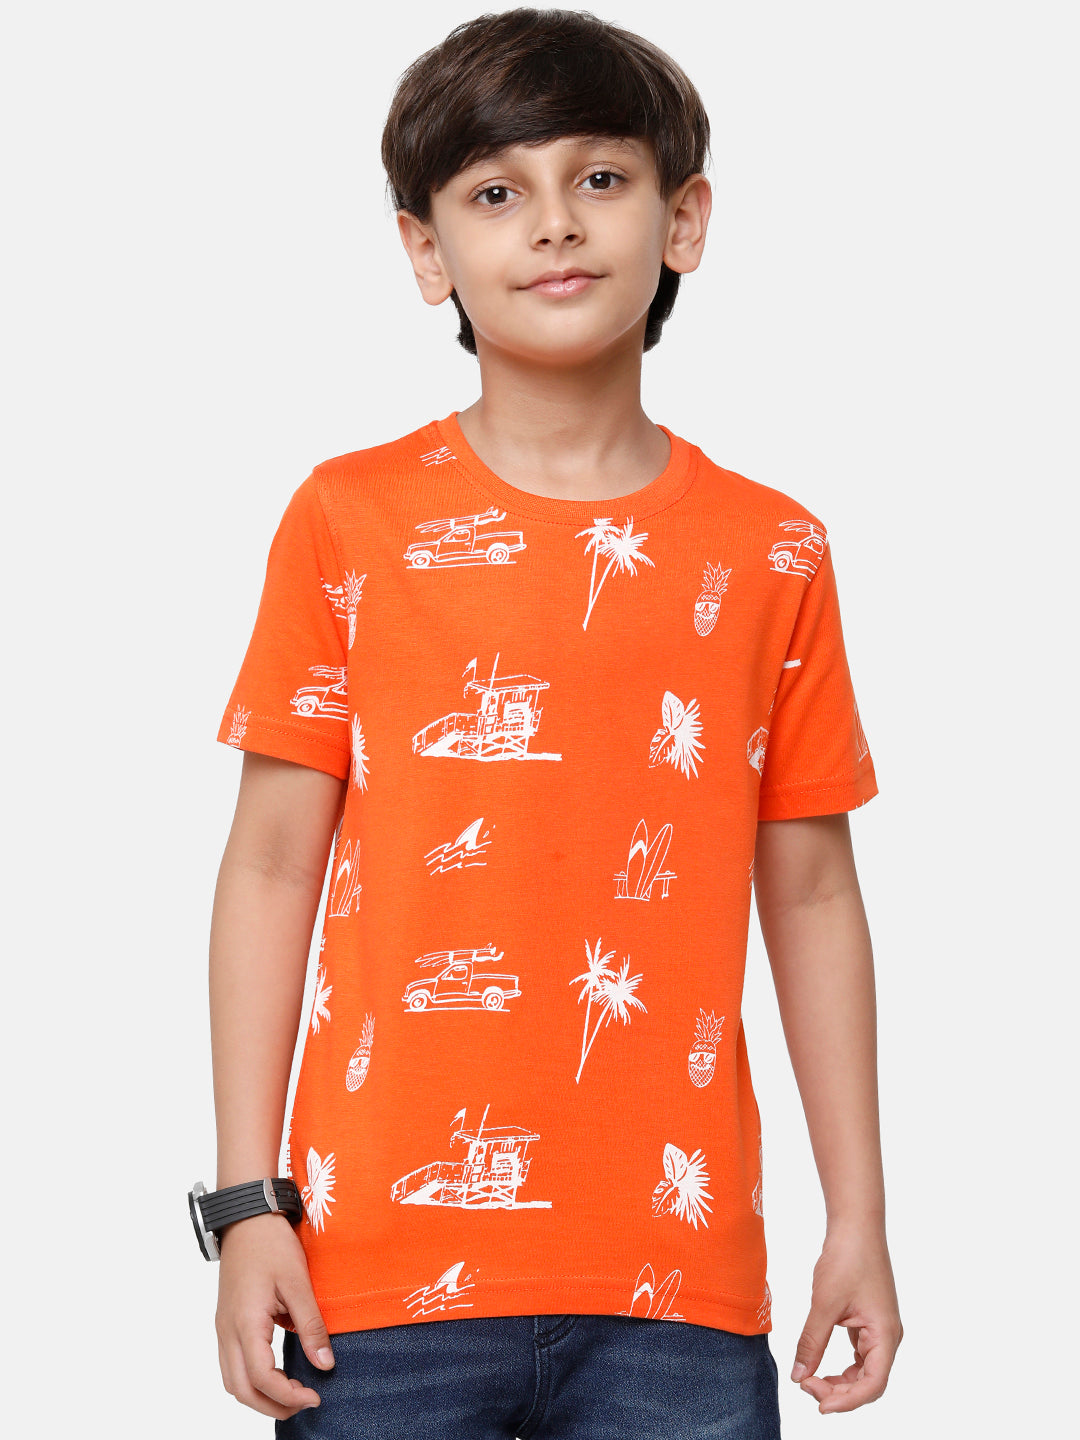 CP Boys Orange Printed Slim Fit Round Neck T-Shirt T-shirt Classic Polo 